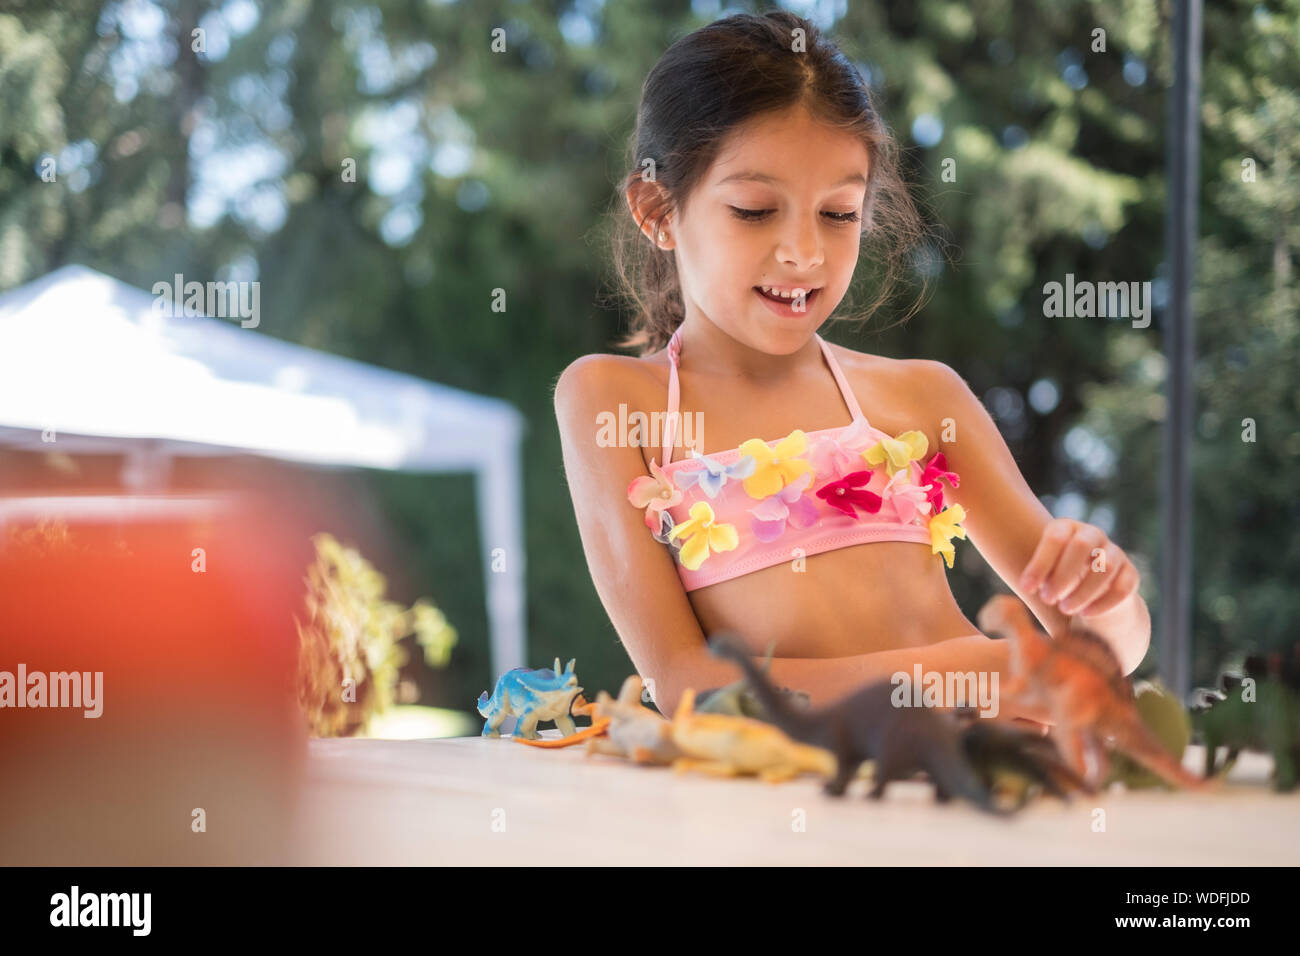 One Girl Child Bikini High Resolution Stock Photography and Images - Alamy